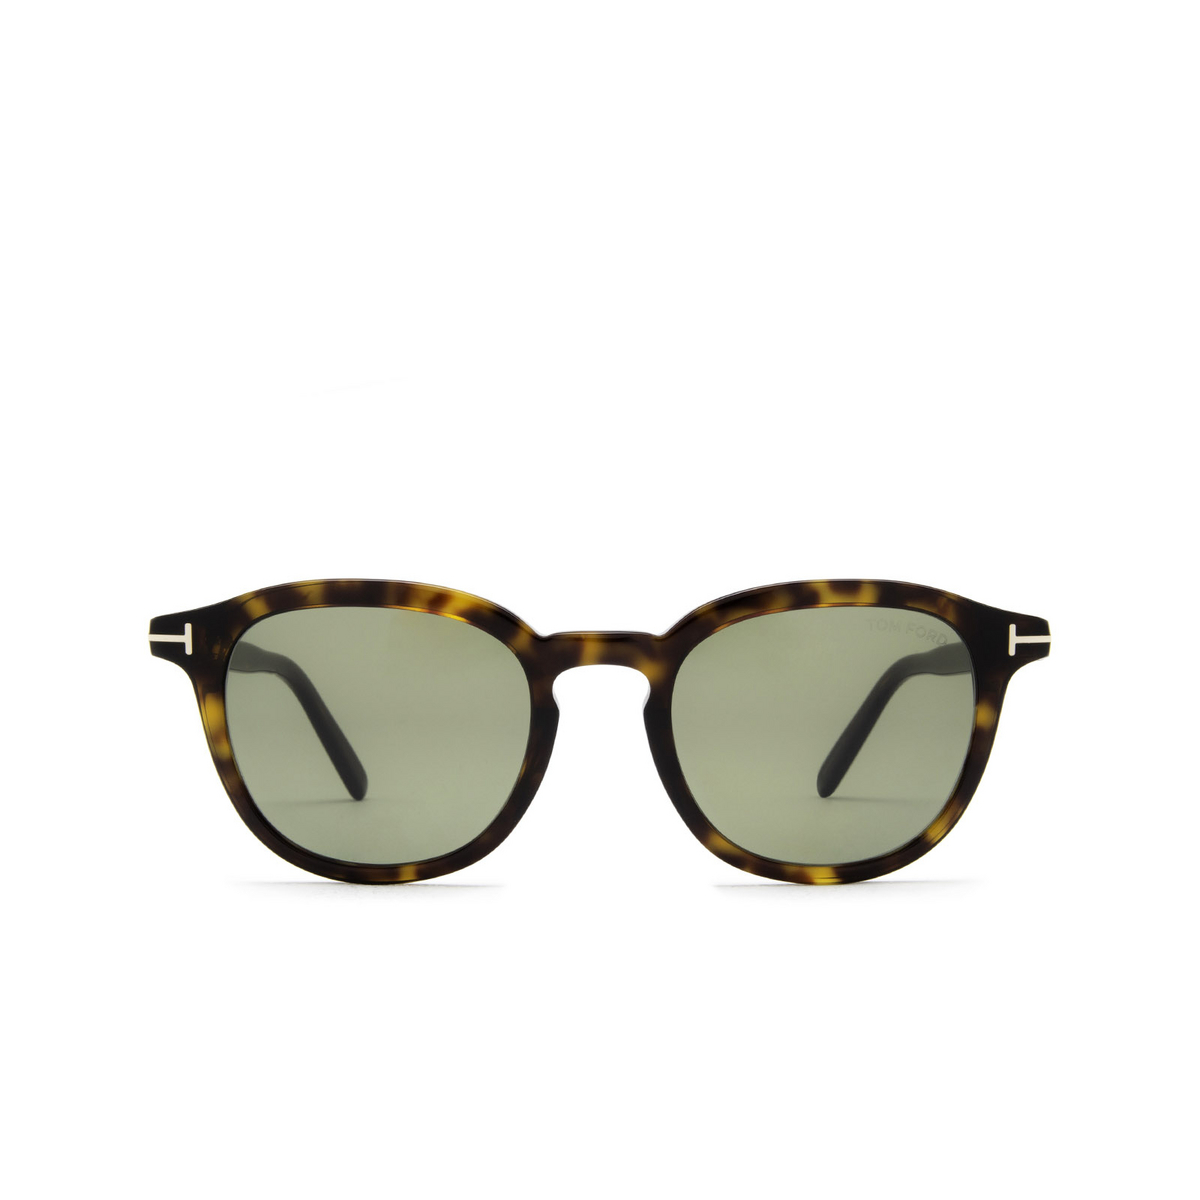 Tom Ford PAX Sunglasses 52N Dark Havana - front view